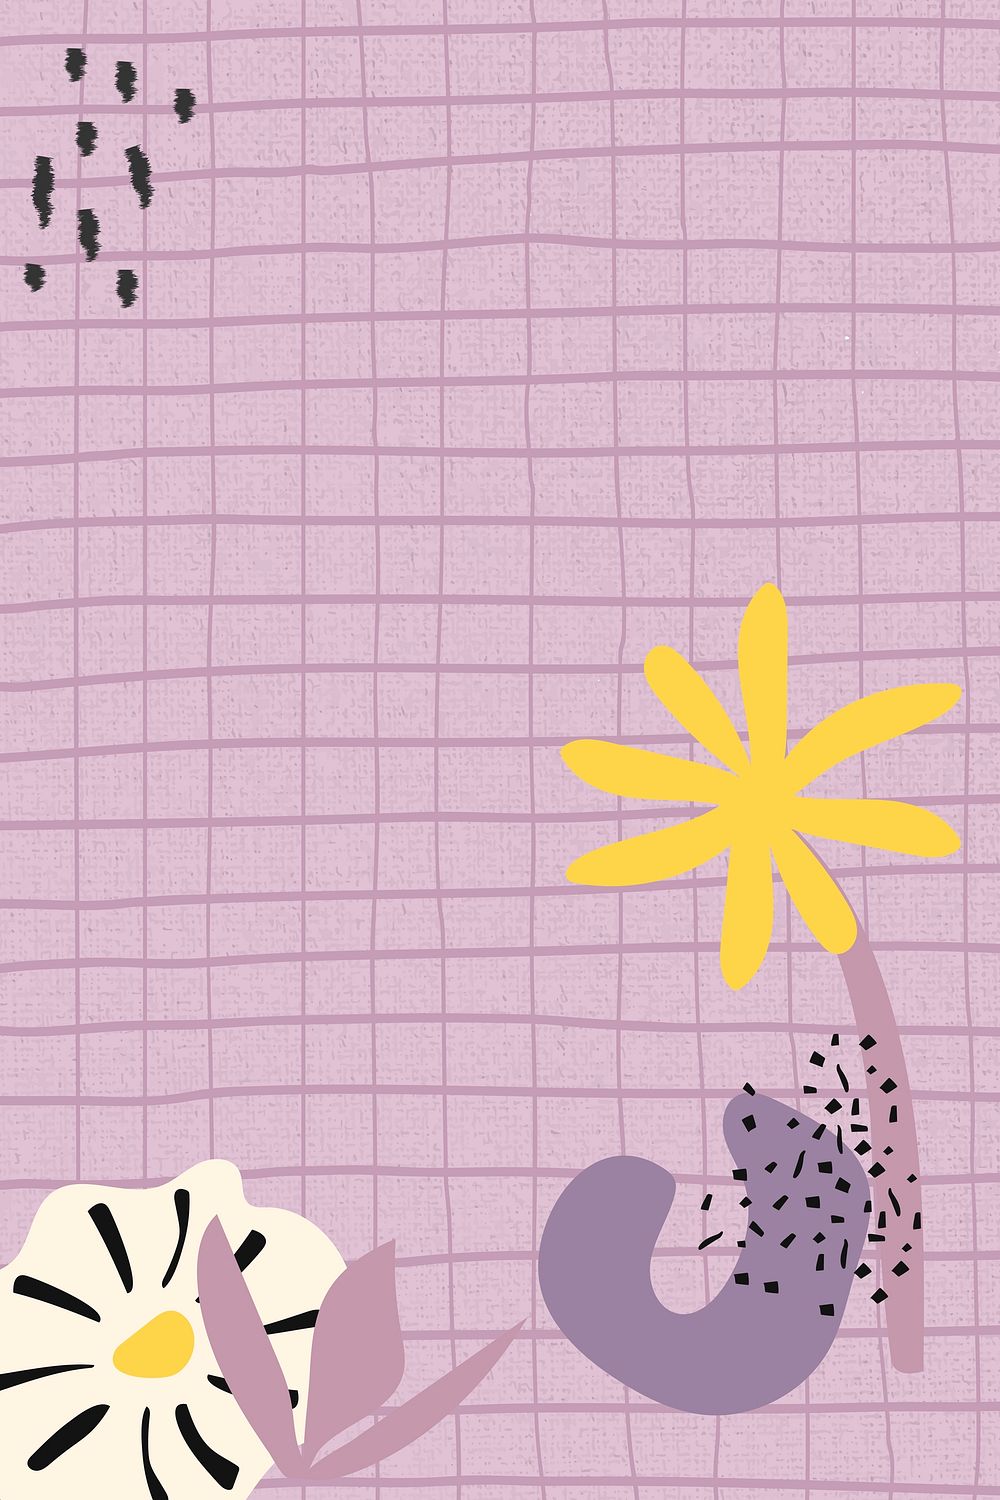 Aesthetic flower purple background, grid | Free Photo - rawpixel